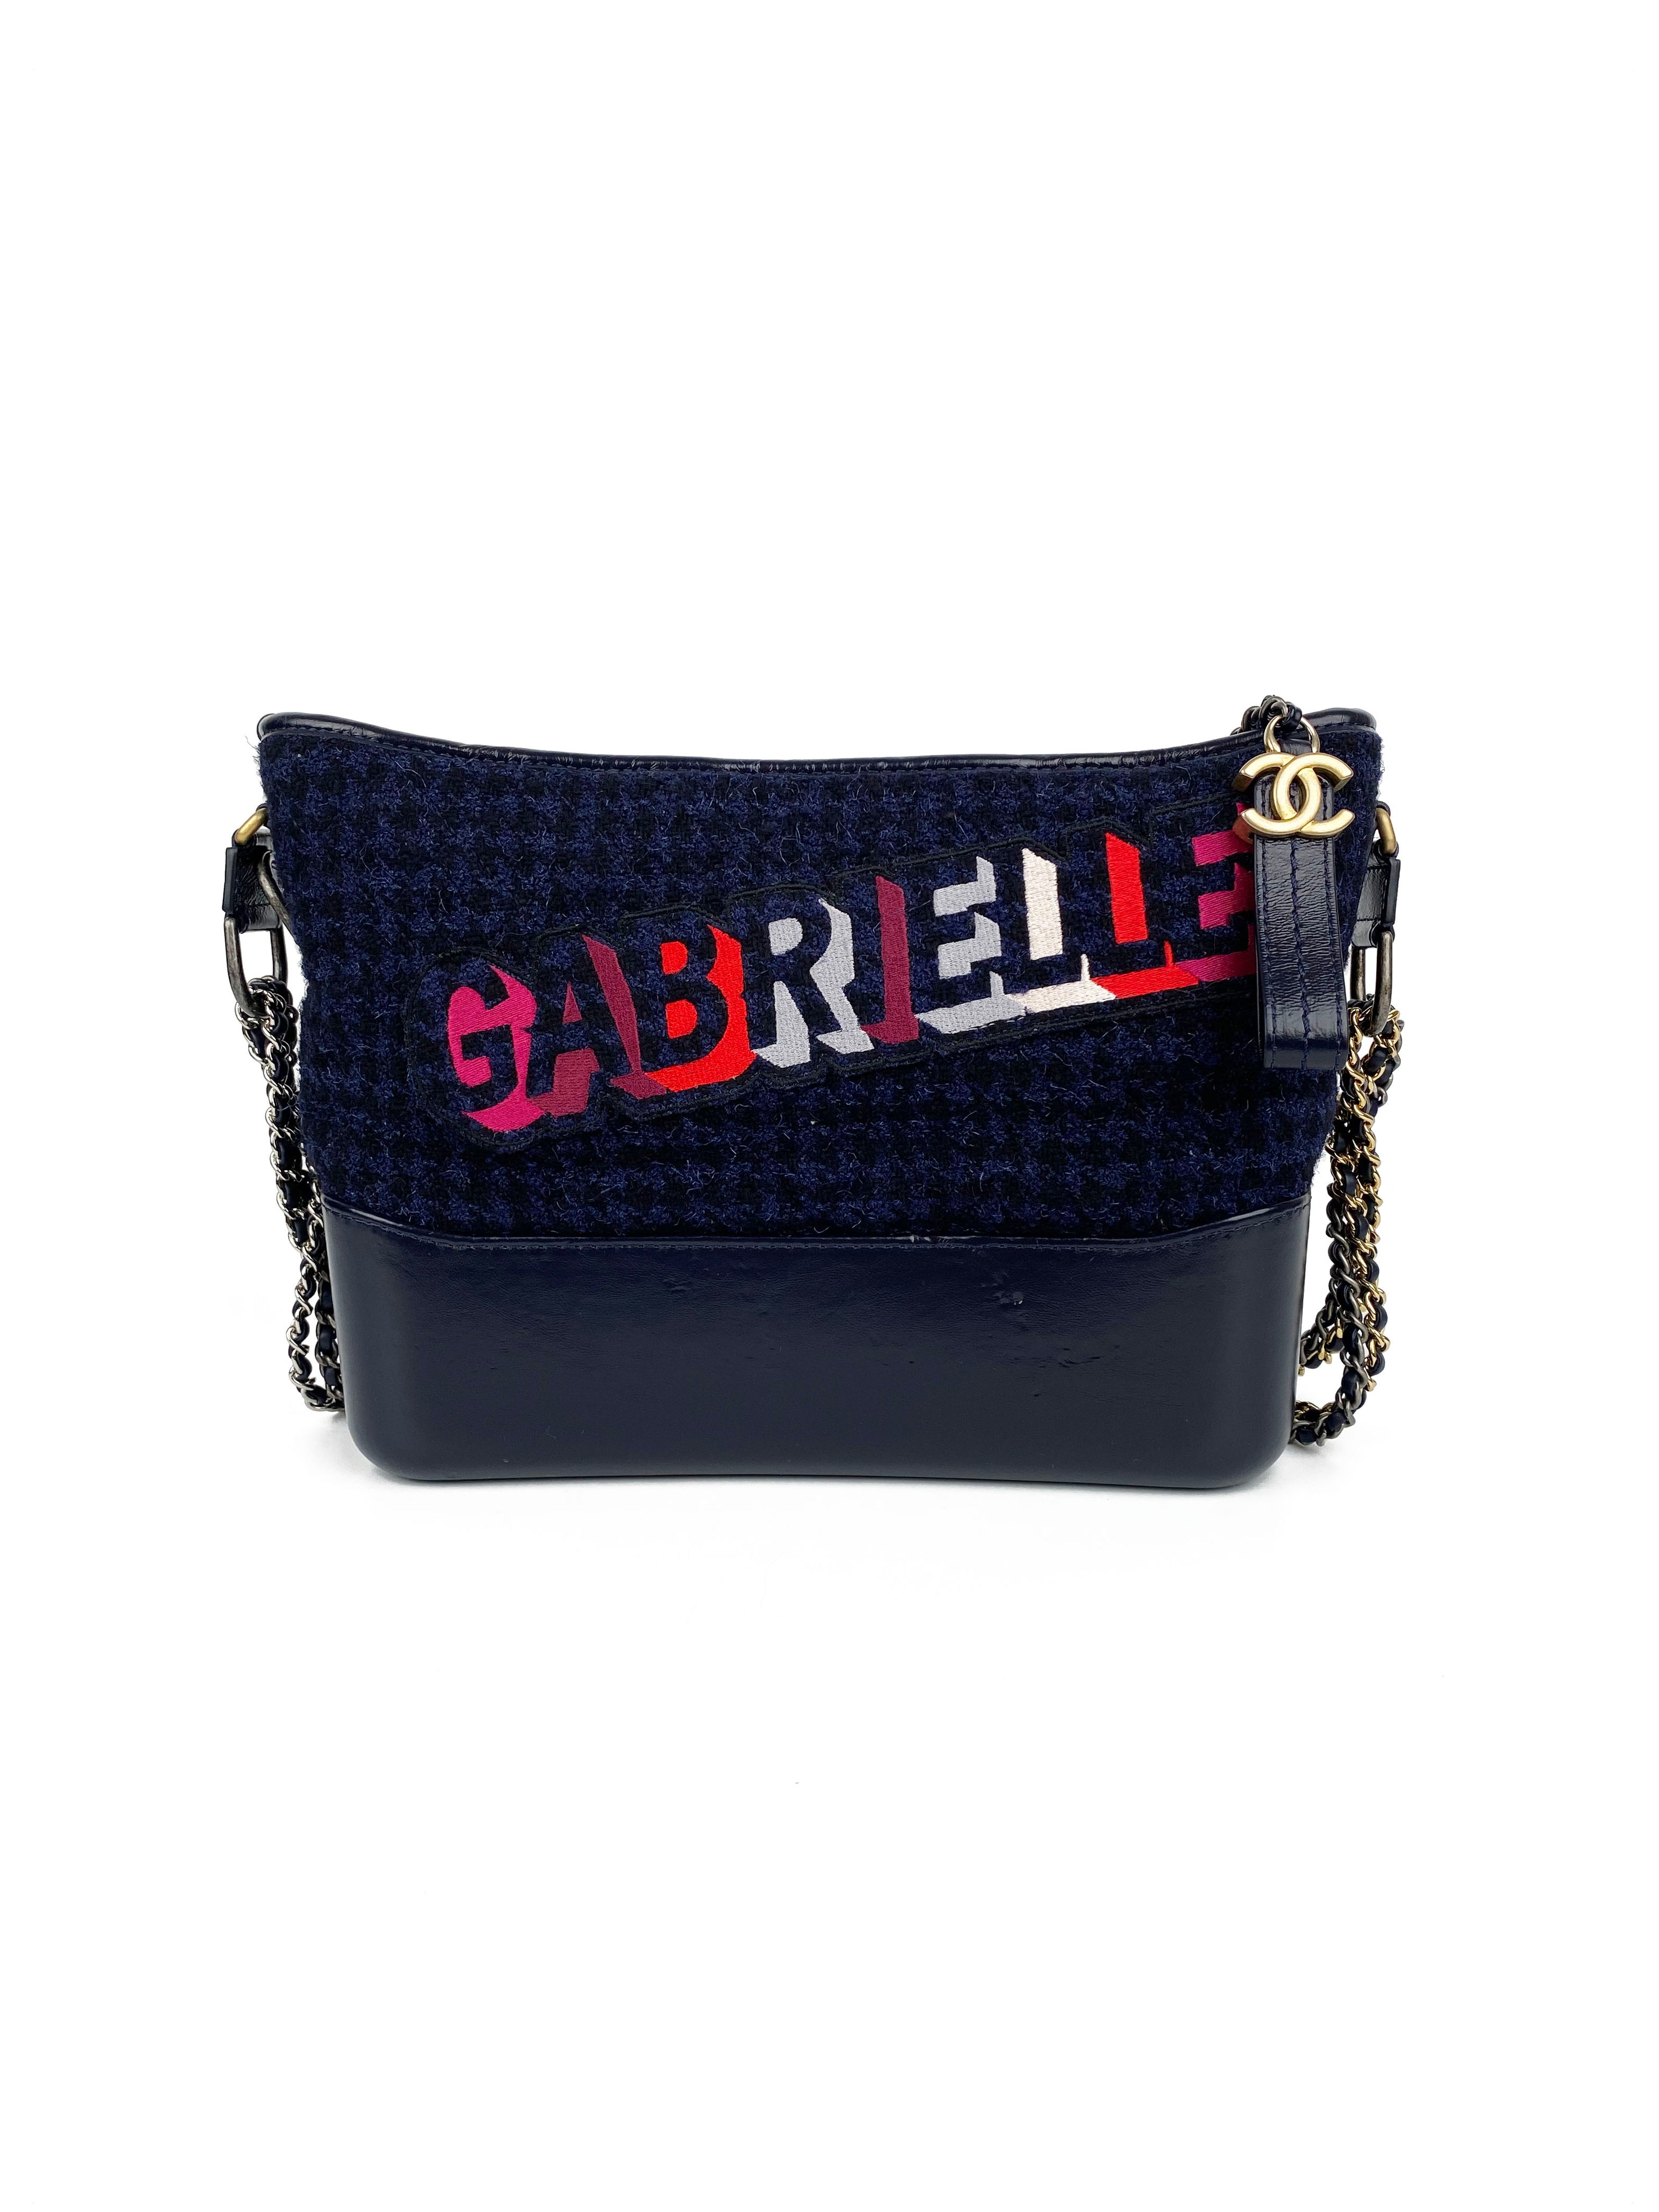 Chanel Navy Tweed Gabrielle Bag